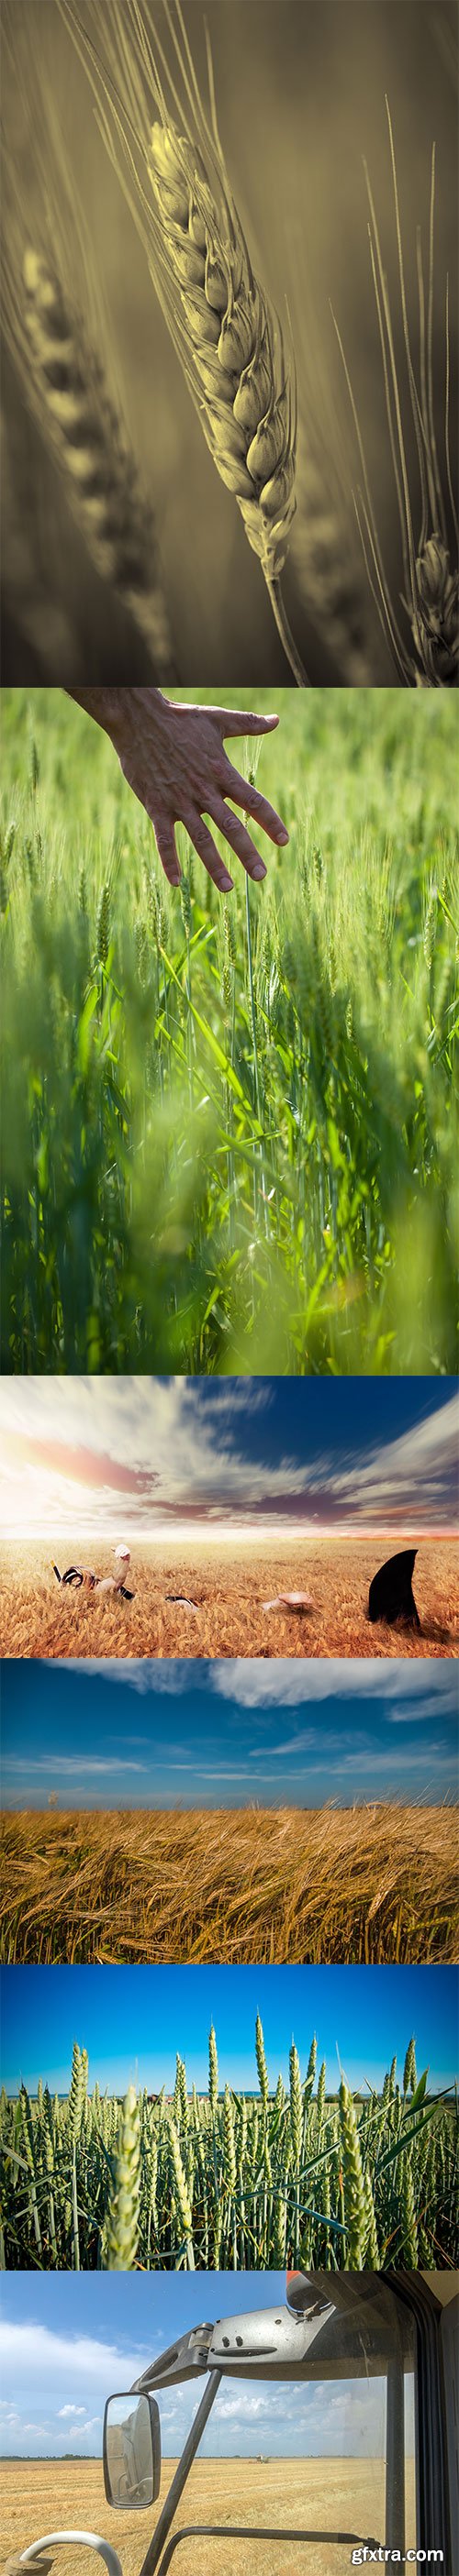 Photo - Field Of Wheat - 8xJPGs